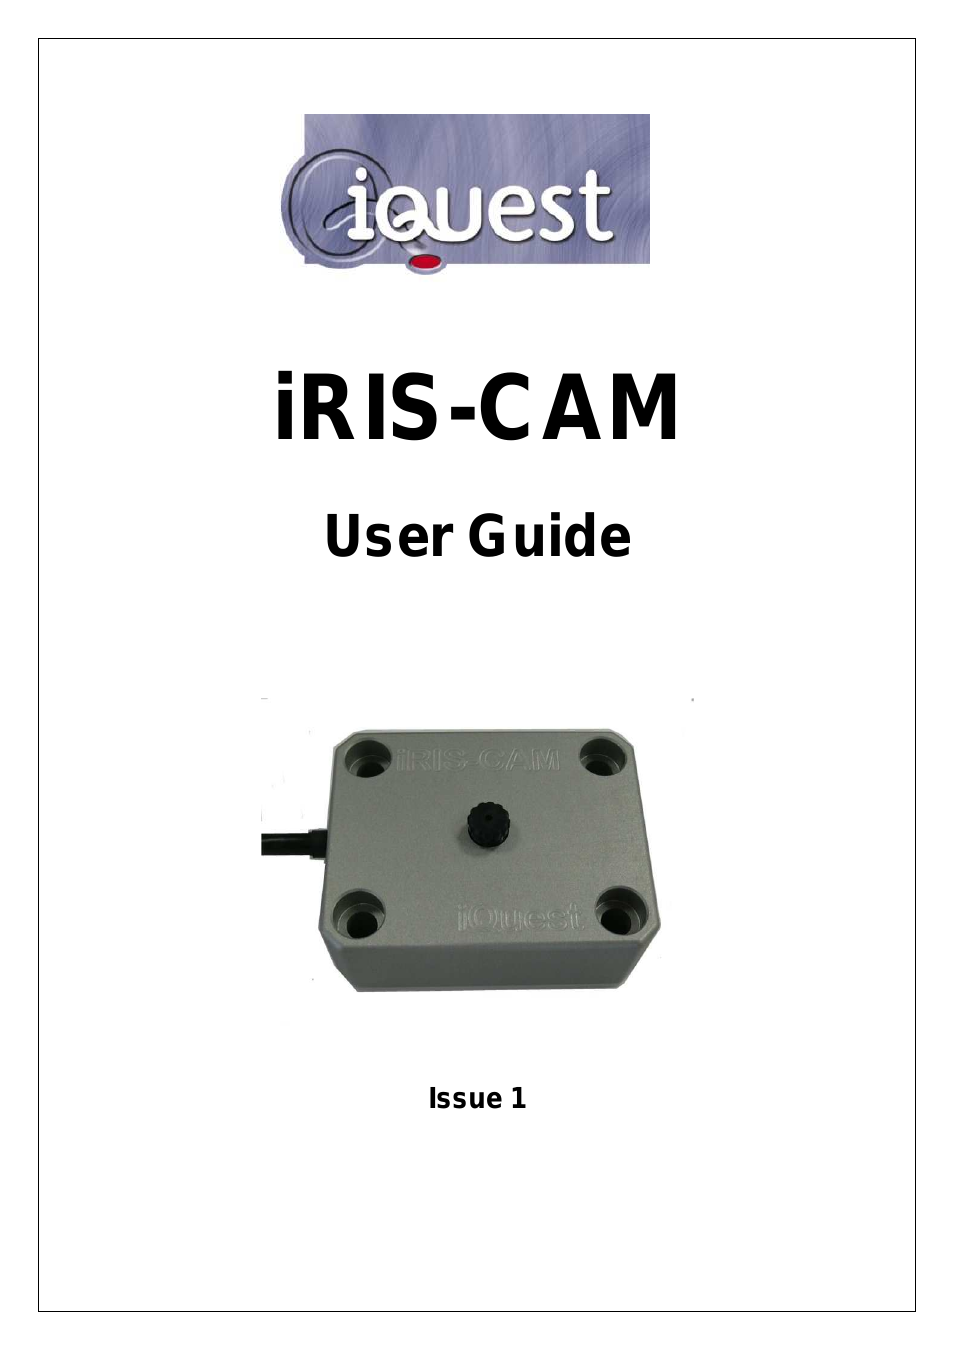 iRIS-CAM Wastewater Security Camera